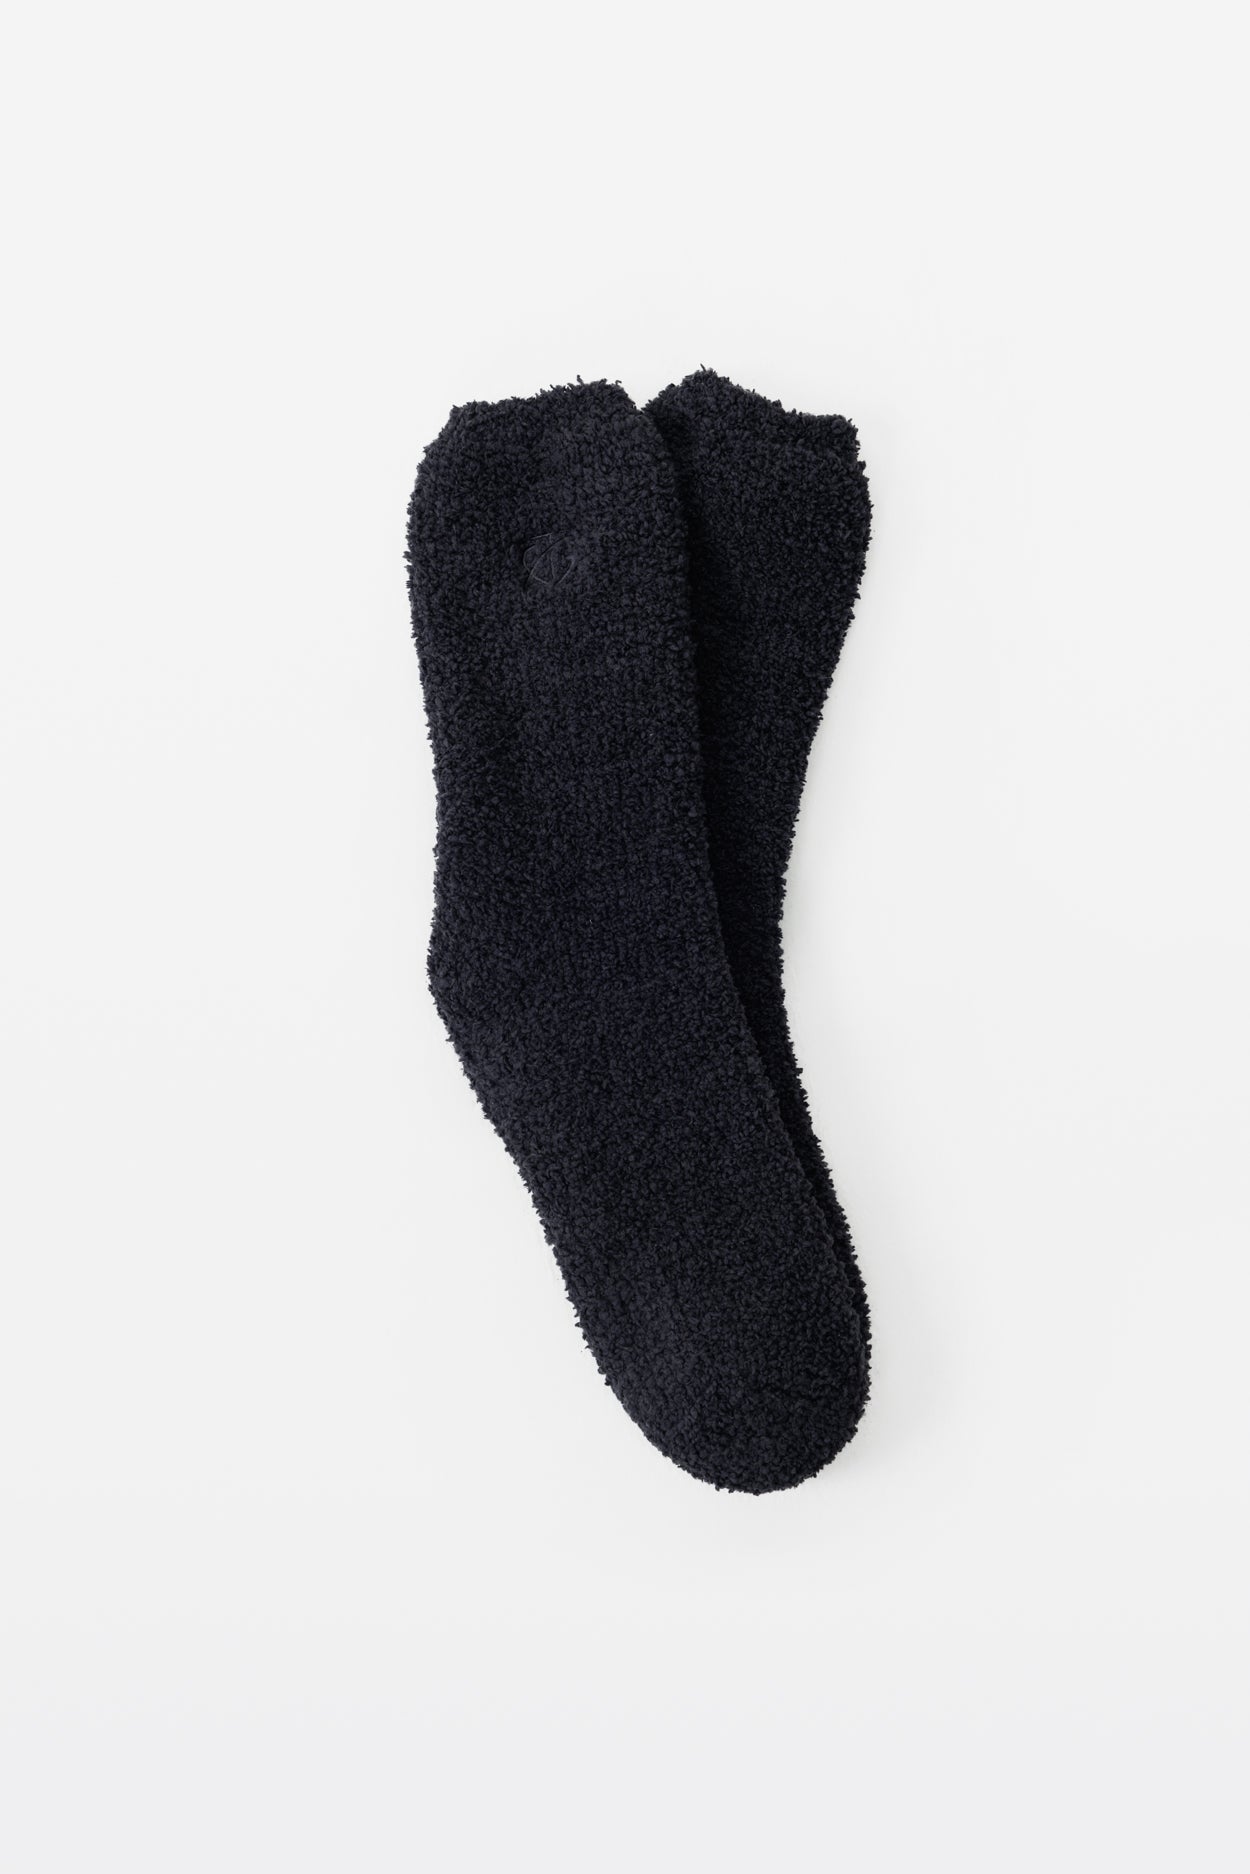 Ash Grey Soft Plush Socks - Socks - Touchofgod.co